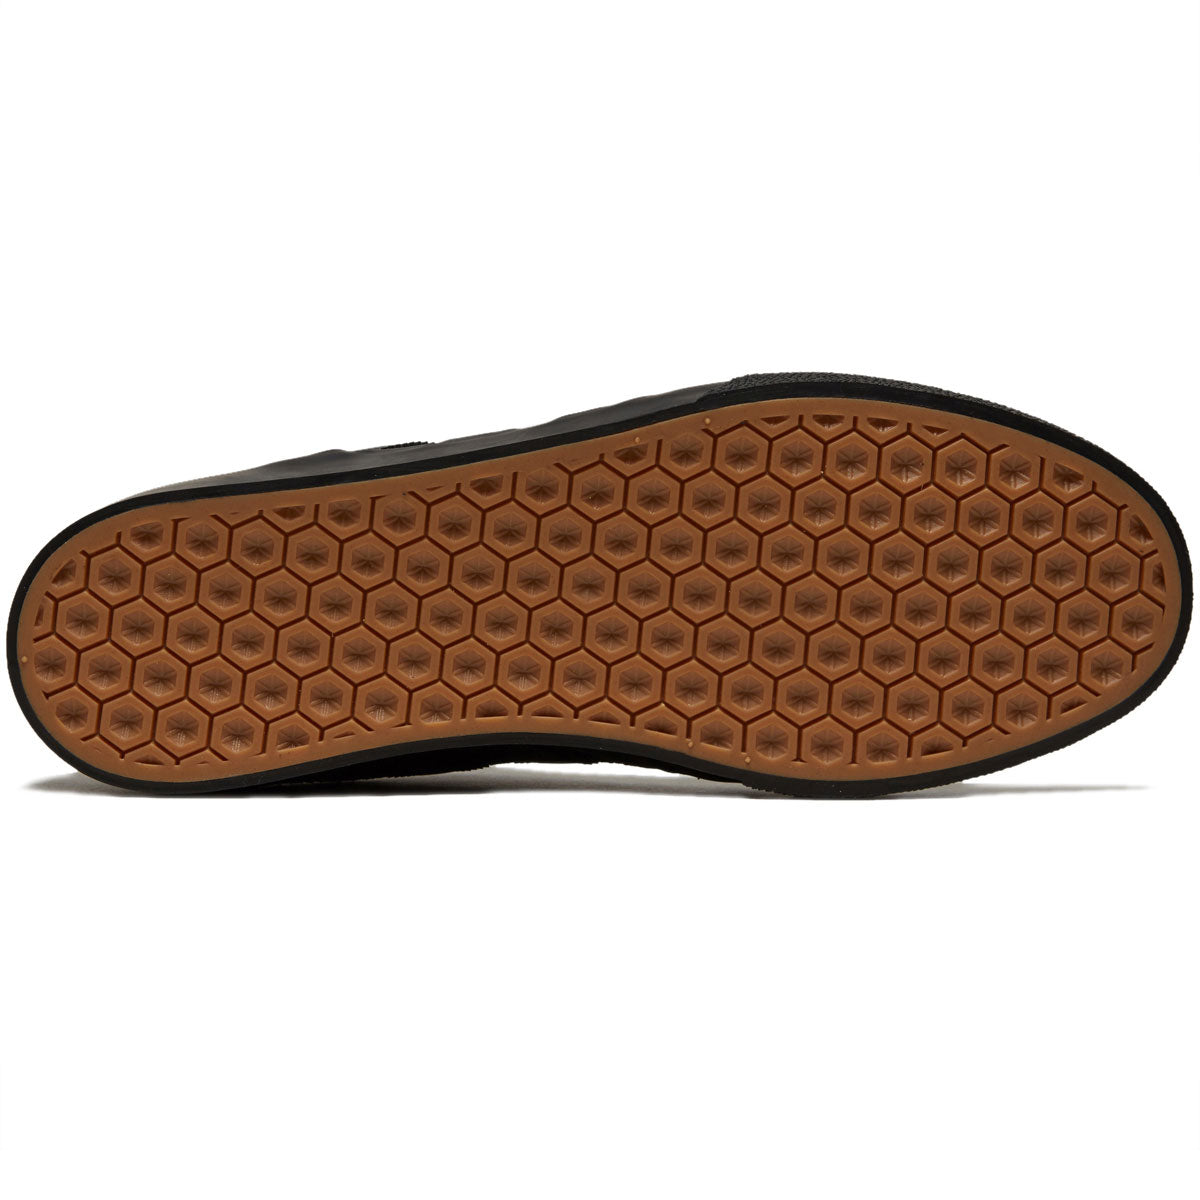 Adidas Busenitz Vulc II Shoes - Core Black/Carbon/Core Black image 4